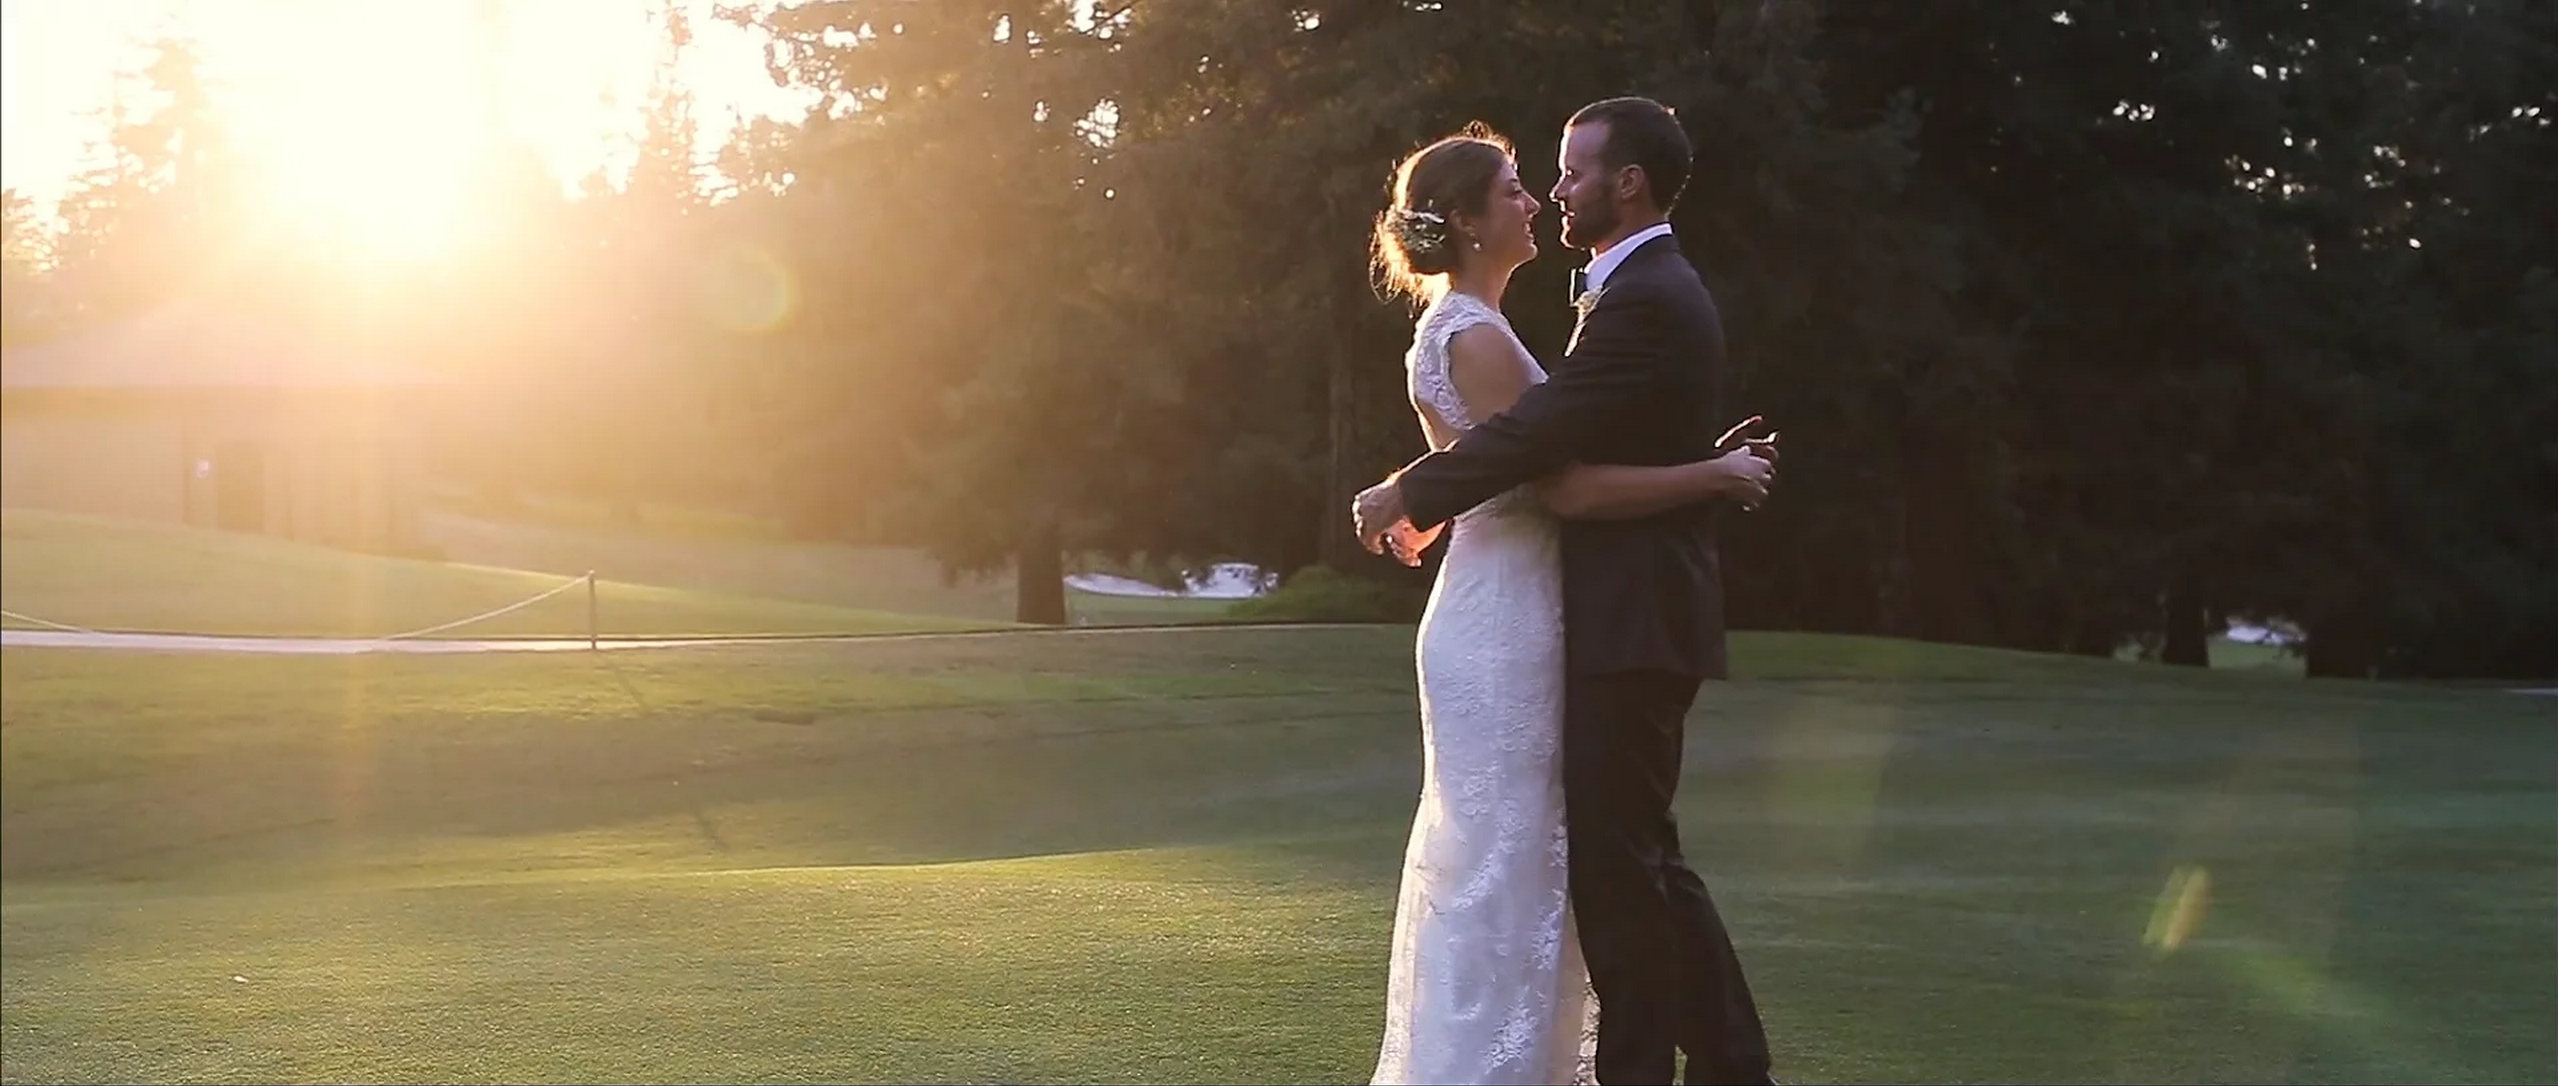 Charlie and Sophia Palo Alto Sharon Heights Golf Club wedding videographer